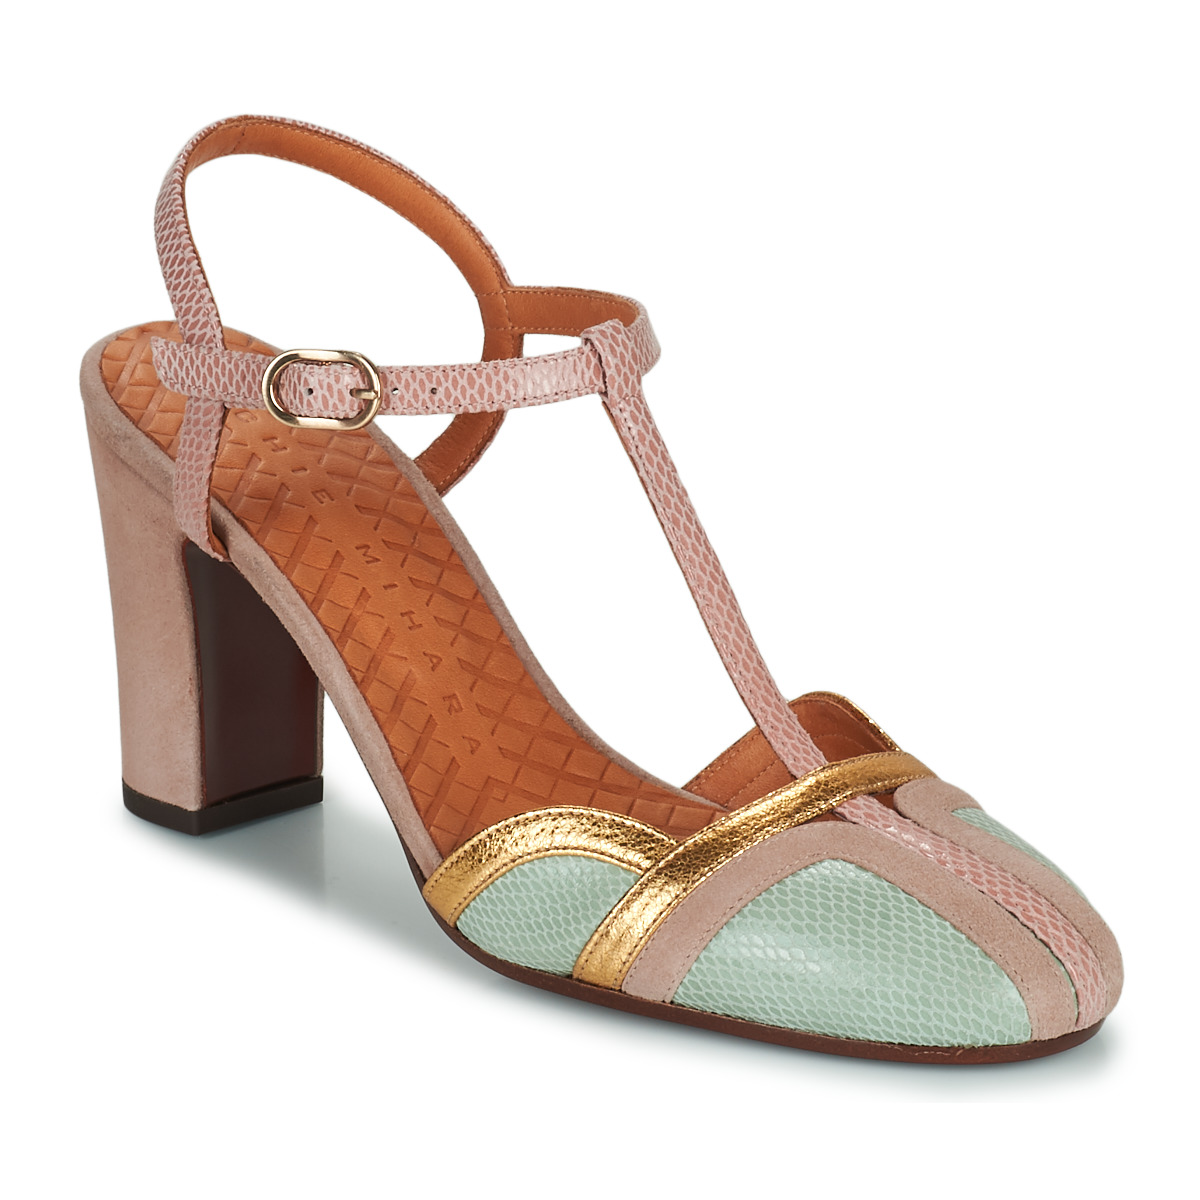 Shoes Women Heels Chie Mihara INMA Beige / Pink / Gold